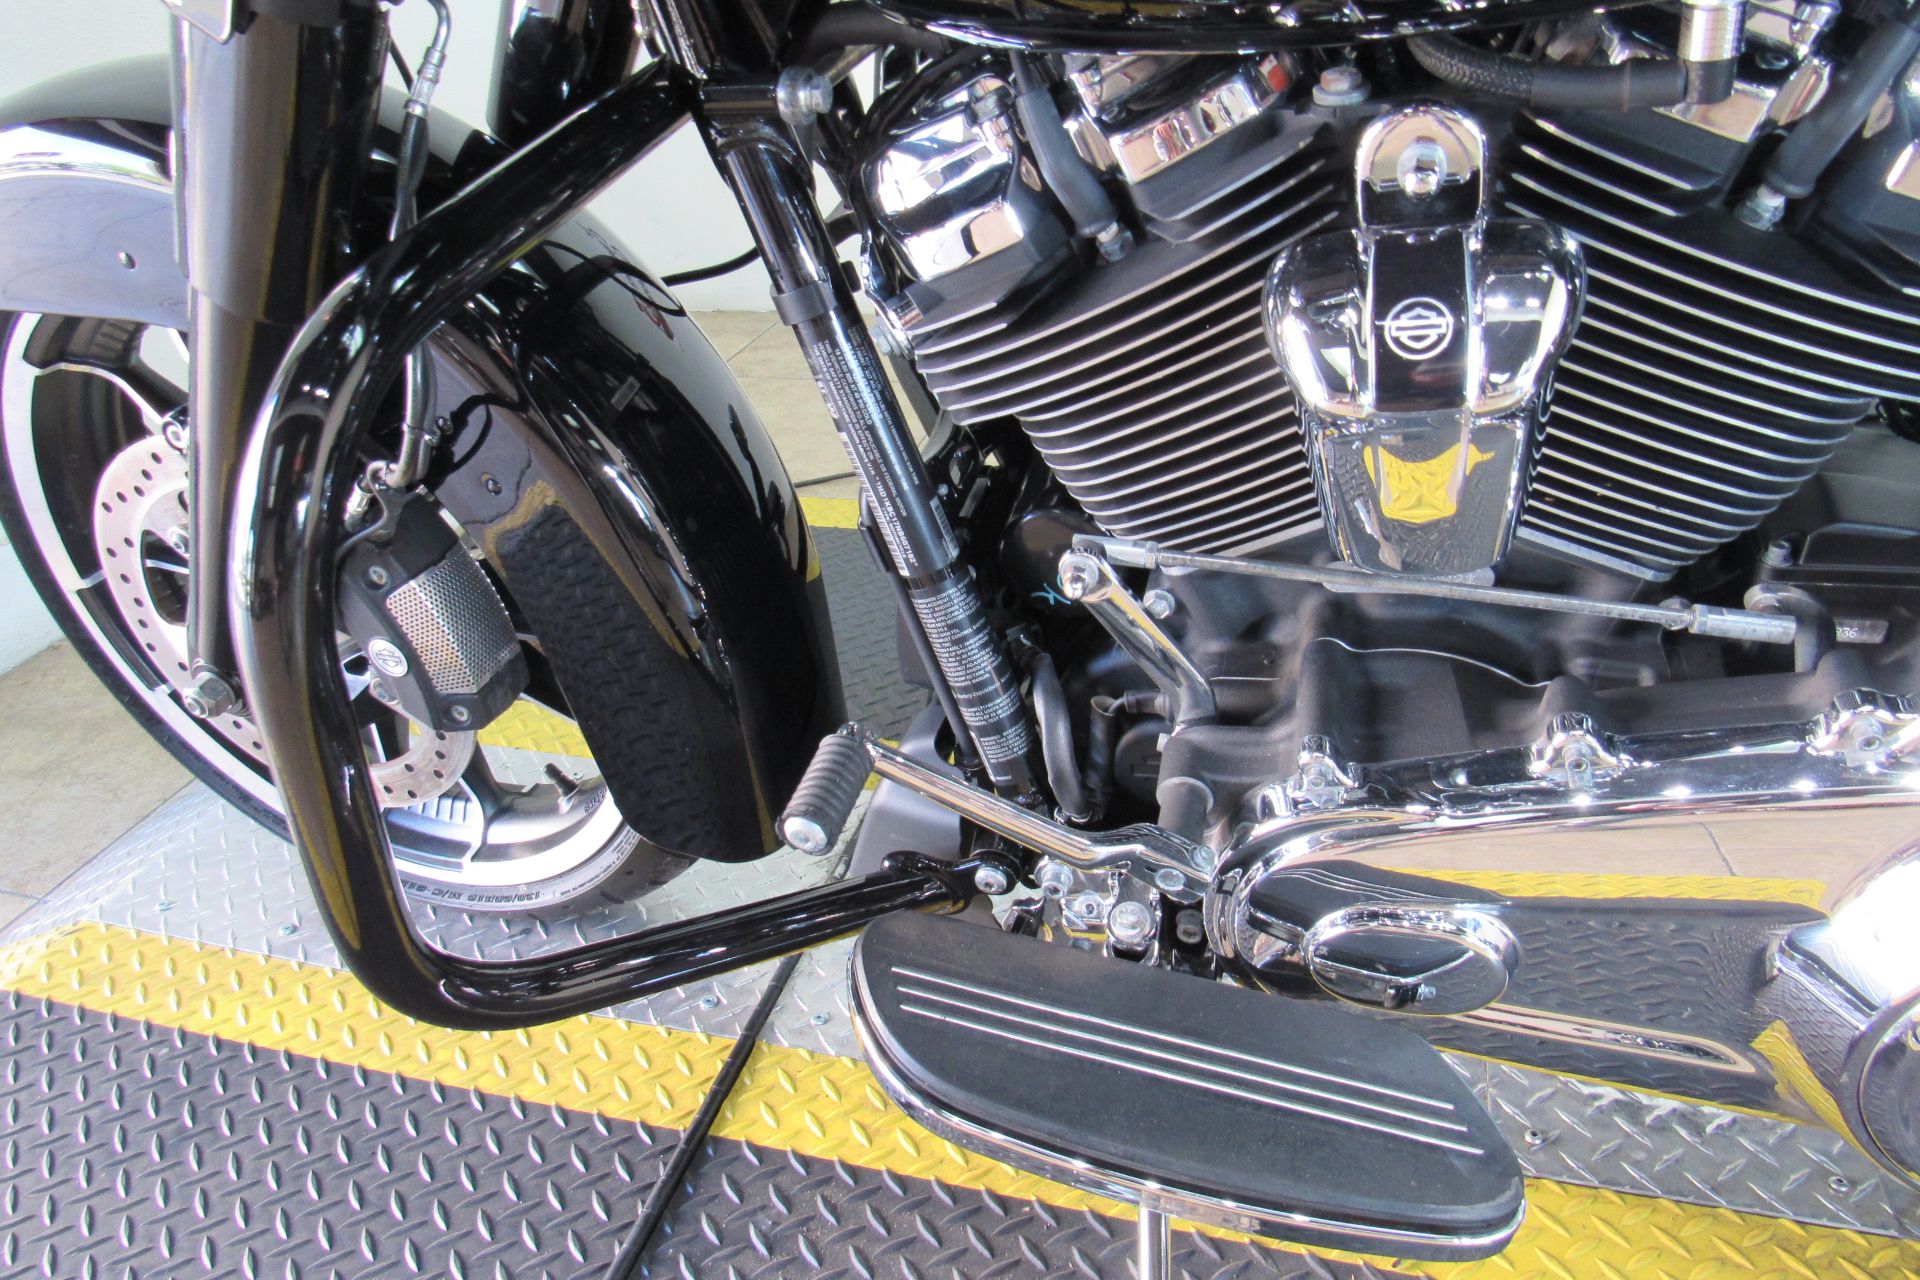 2022 Harley-Davidson Street Glide® in Temecula, California - Photo 17